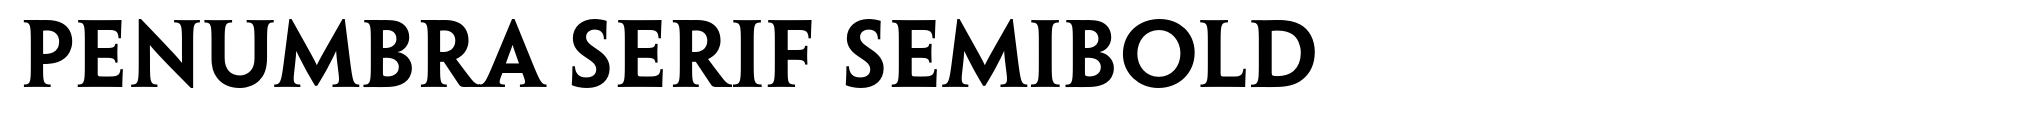 Penumbra Serif SemiBold image